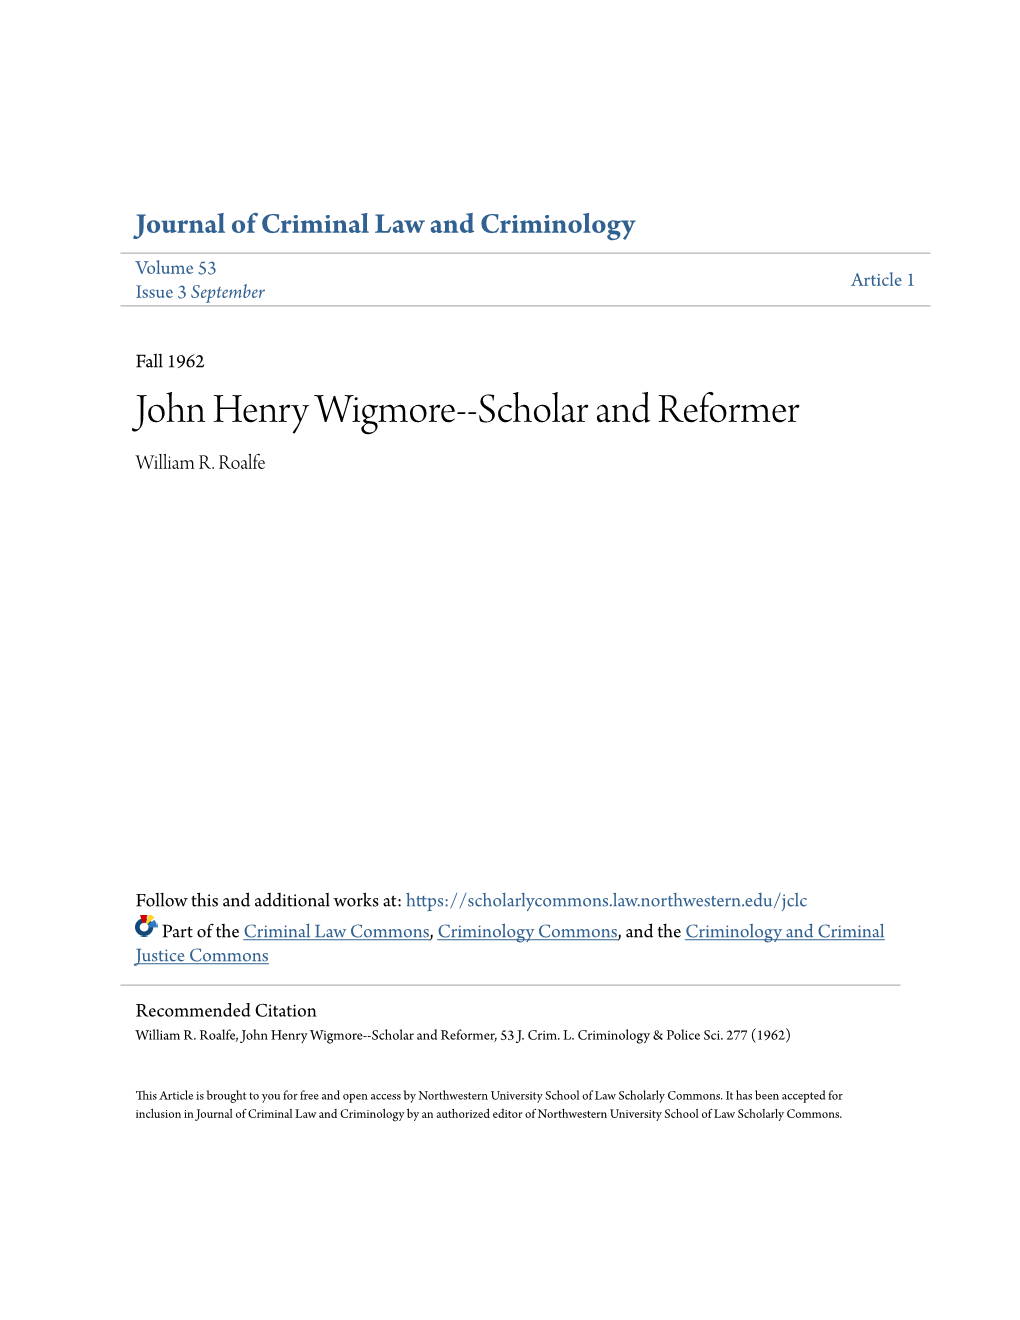 John Henry Wigmore--Scholar and Reformer William R